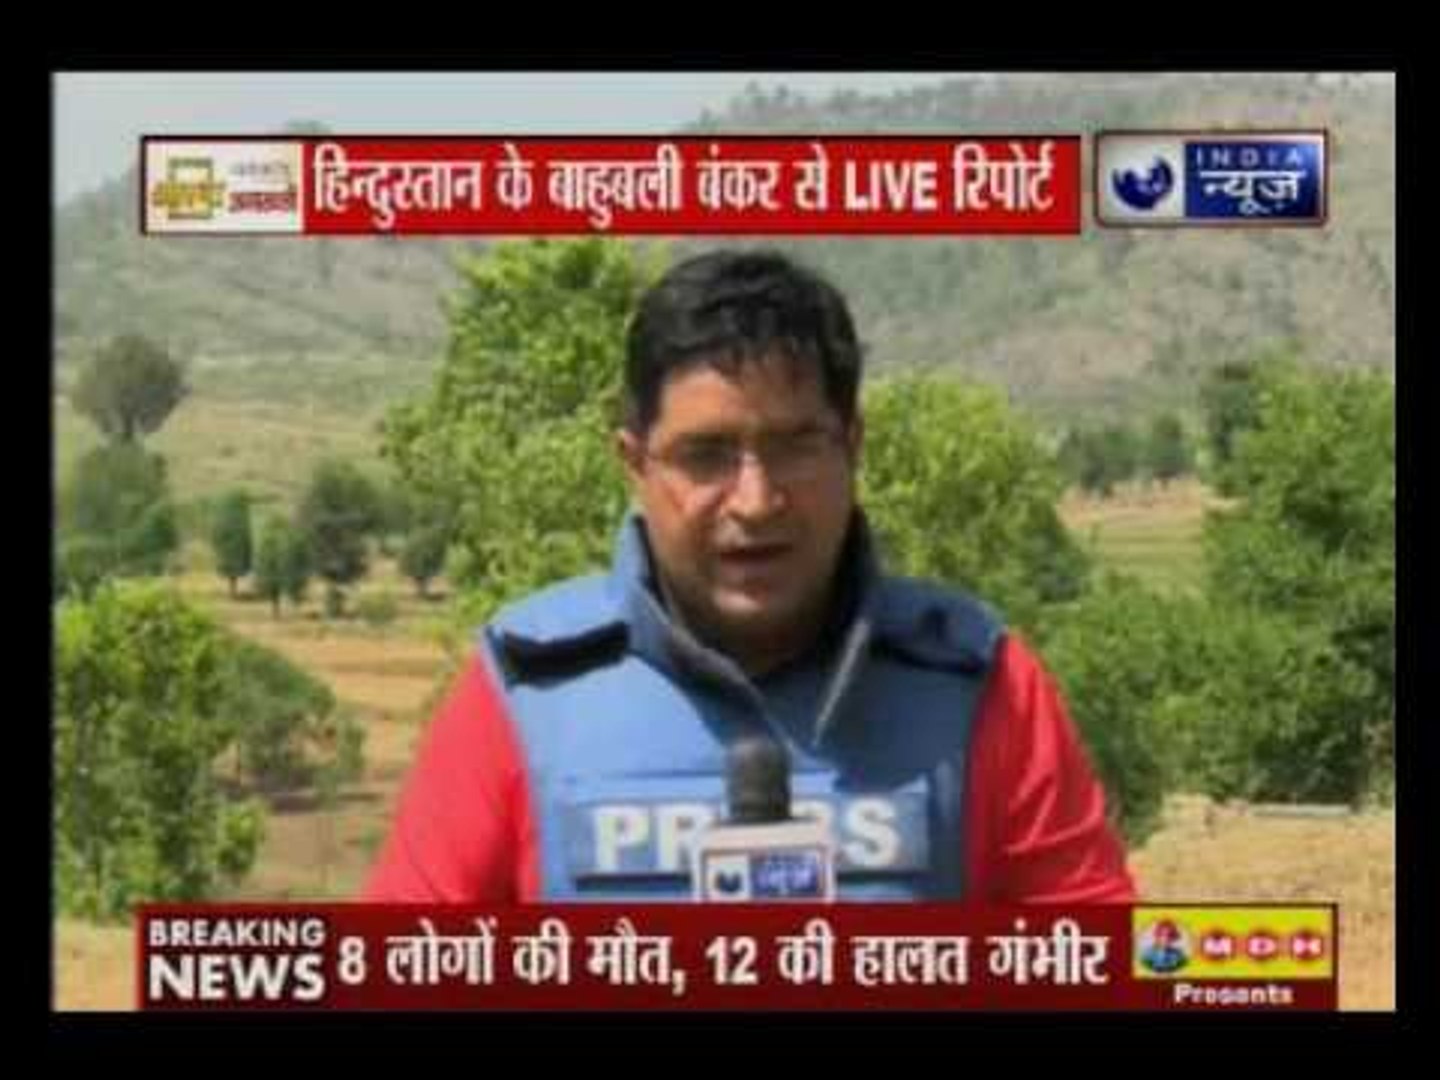 India Vs Pakistan: Live report from Border — Exposes Pak fake video